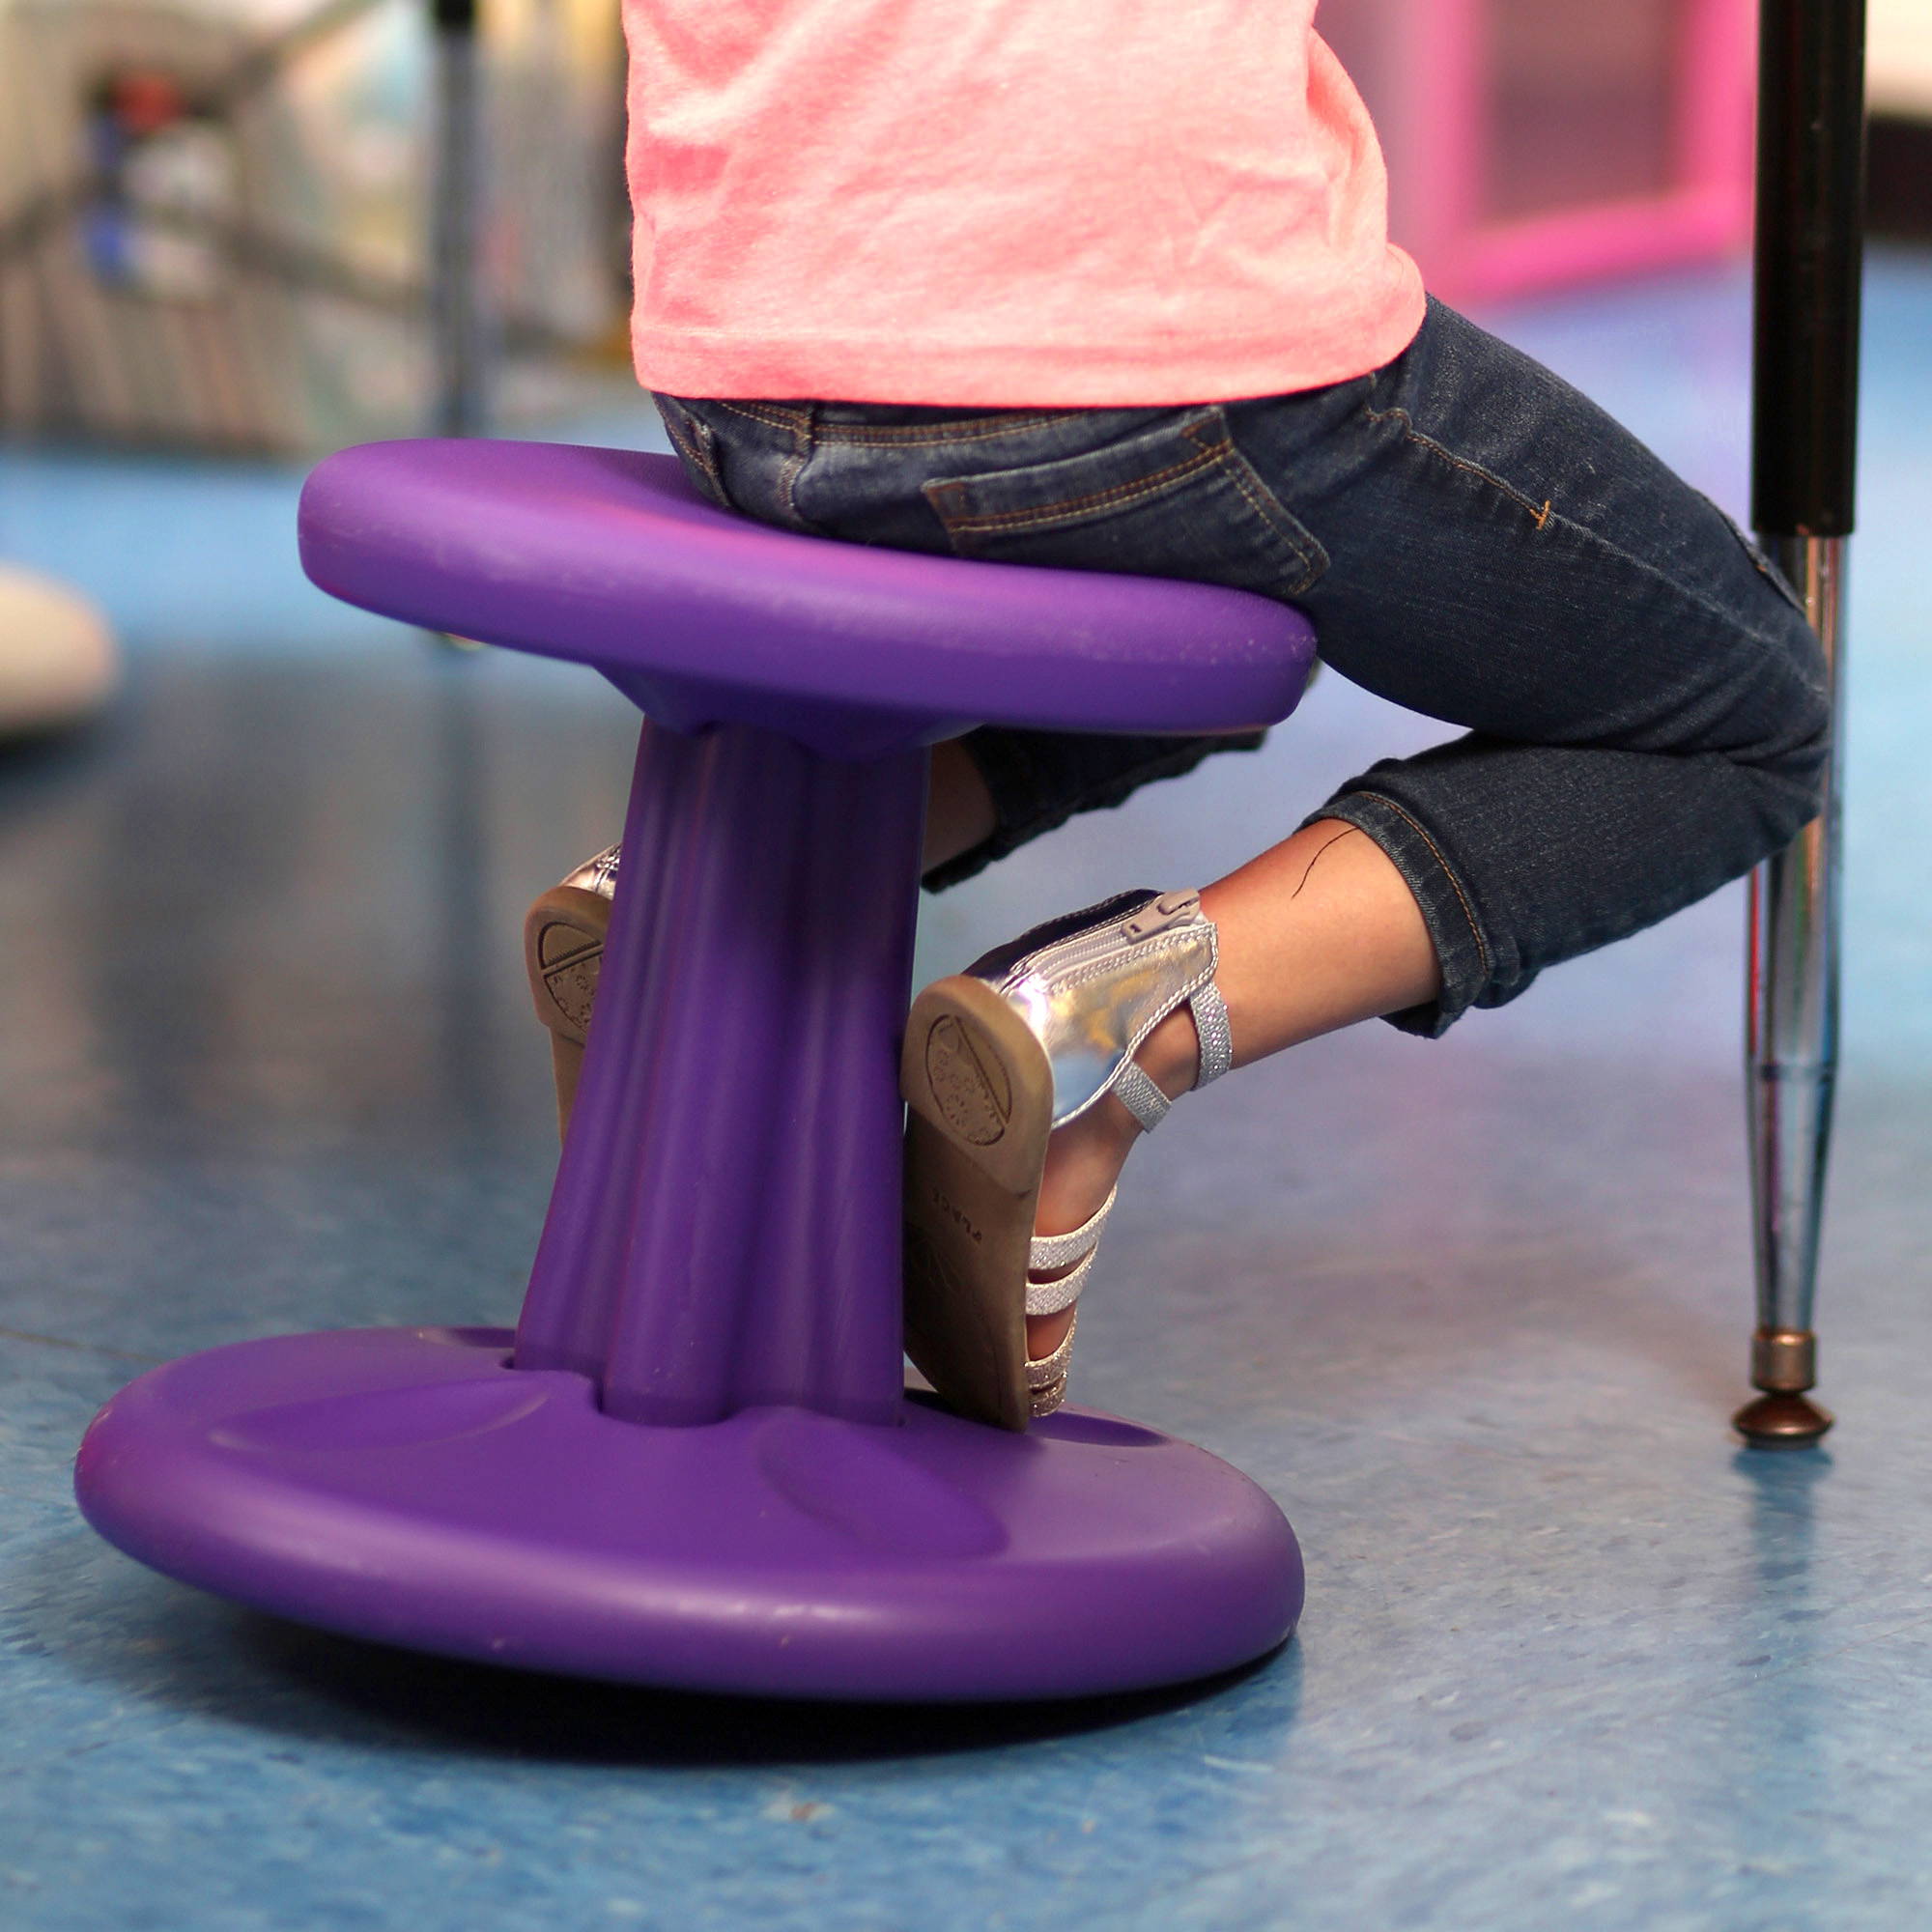 Kore Designs Wobble Chair | Homeschool Chair | Wobble Stools